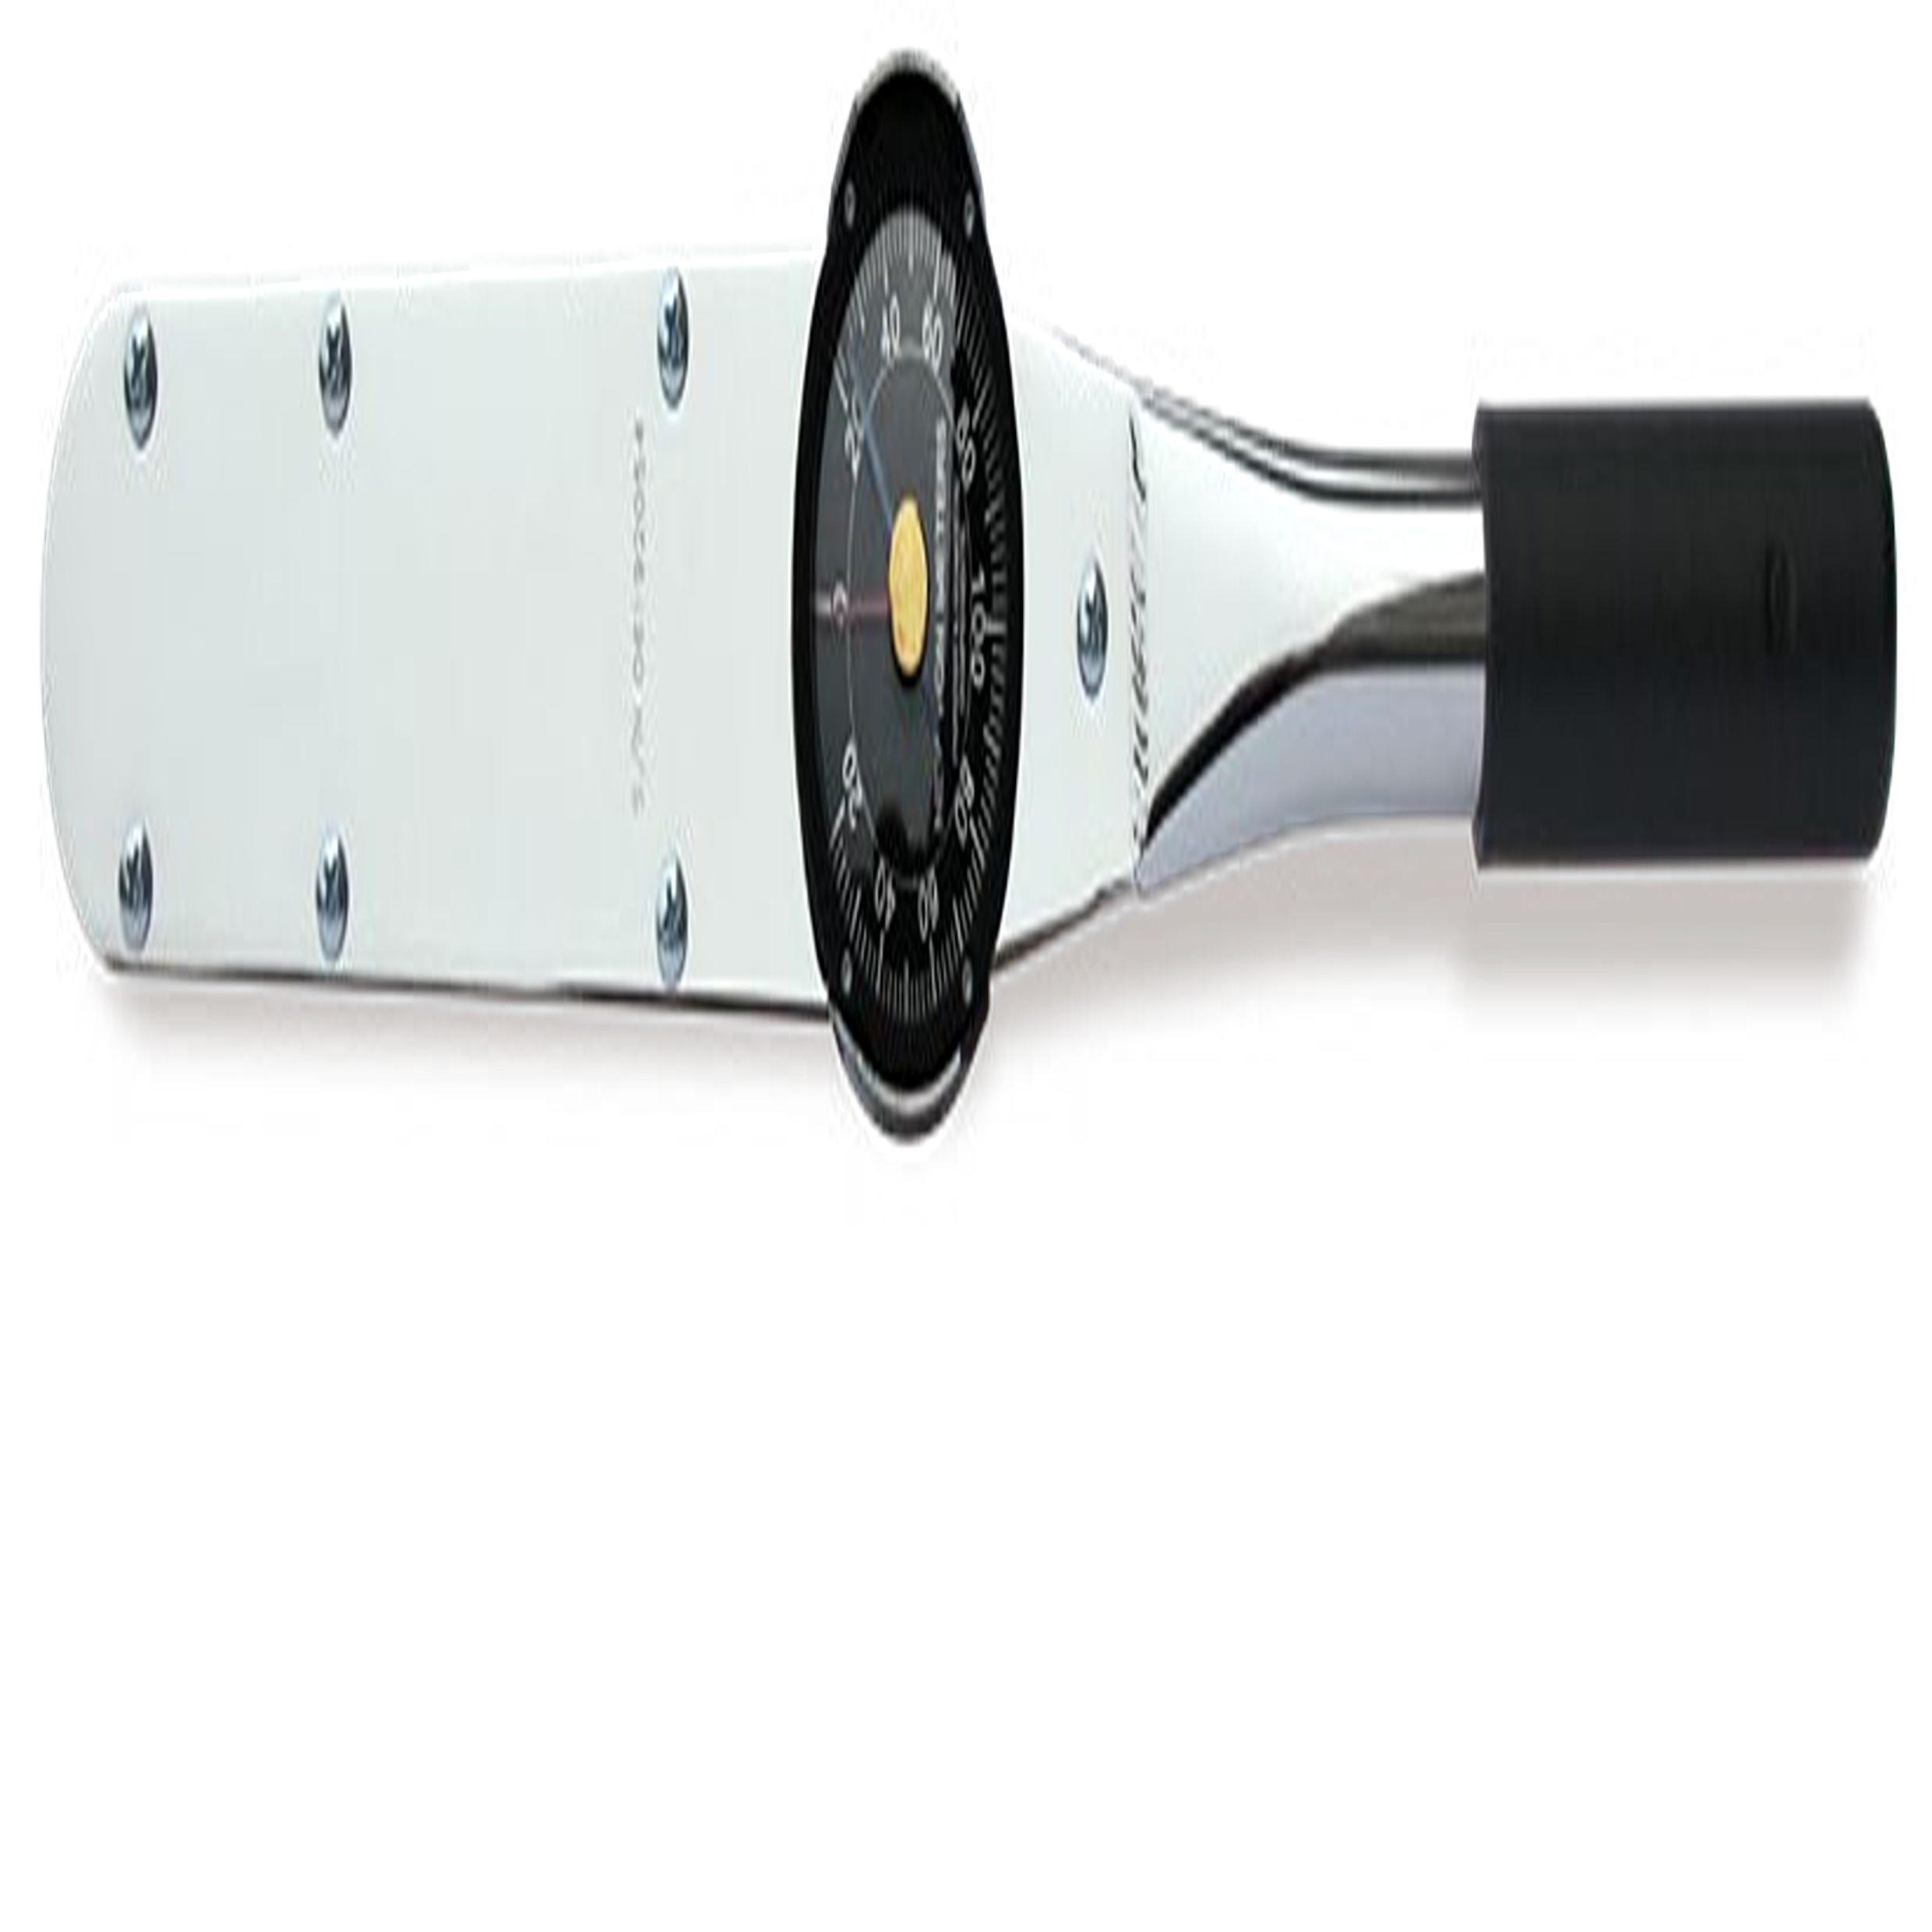 TECNOGI 2015 Dial Torque Wrench 3 - 15 Nm (TECNOGI Tools) - Premium Dial Torque Wrench from TECNOGI - Shop now at Yew Aik.